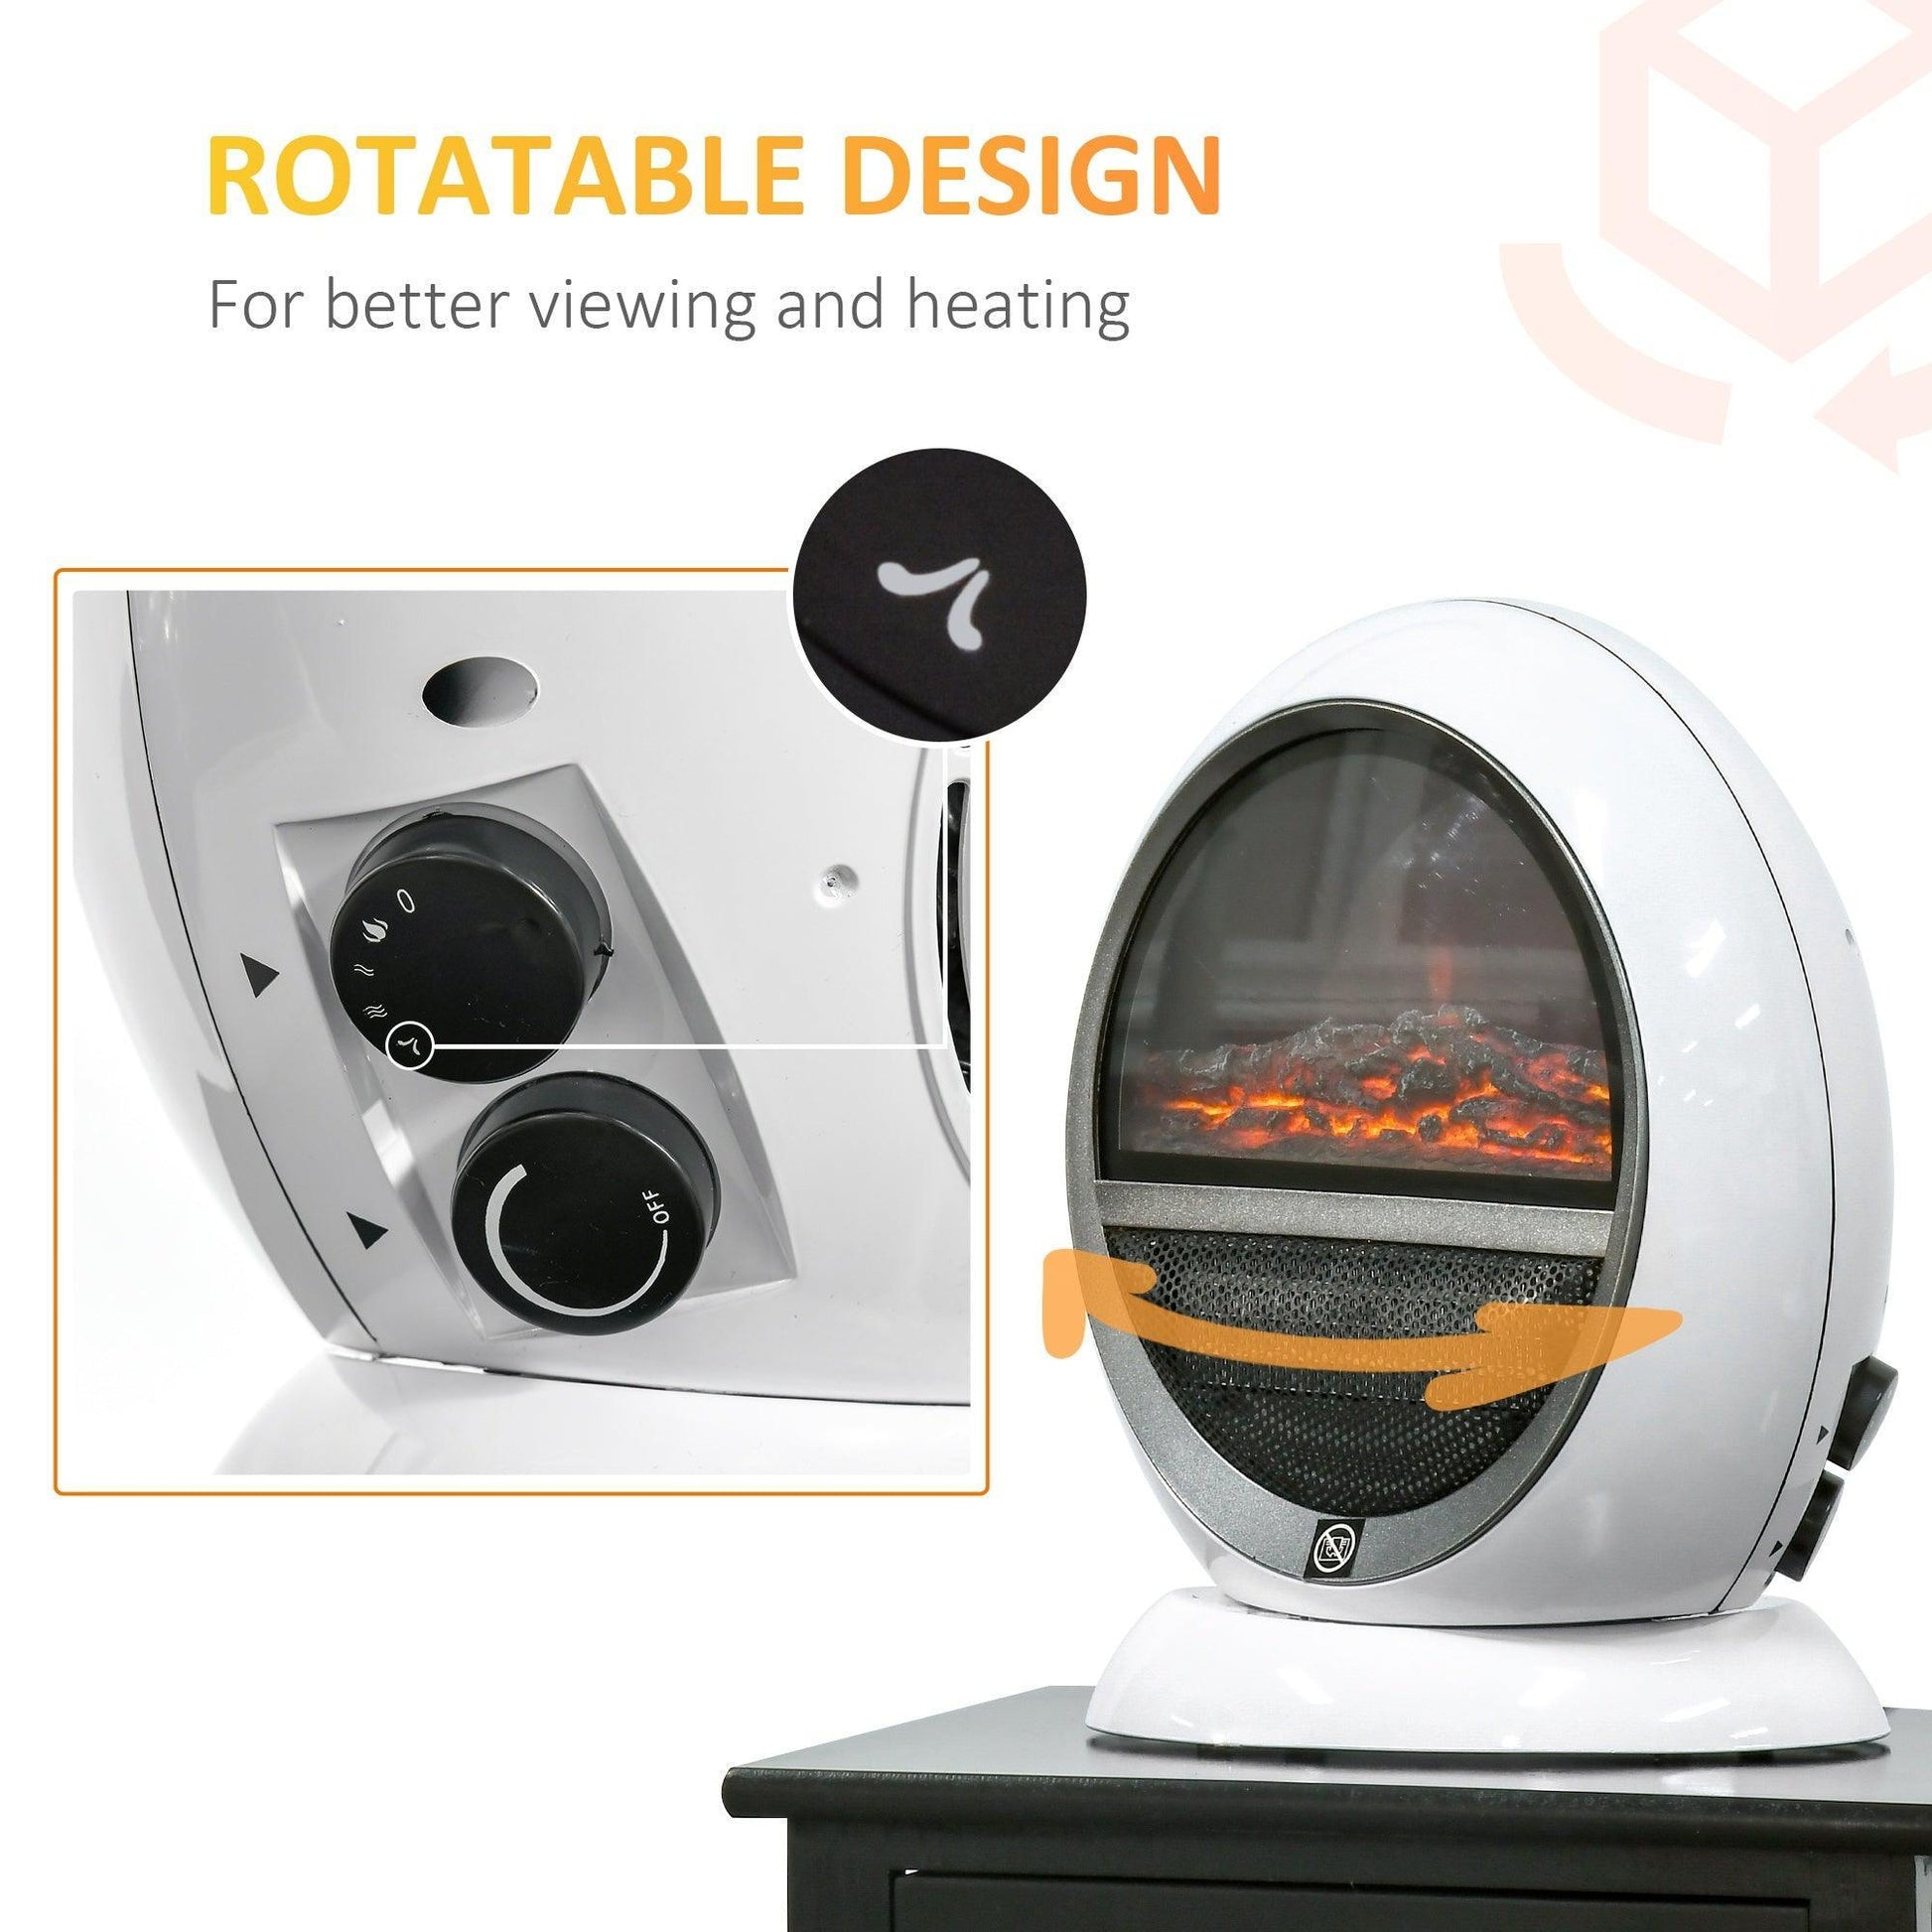 HOMCOM Electric Fireplace Heater - Realistic Flame - Rotatable Head - ALL4U RETAILER LTD